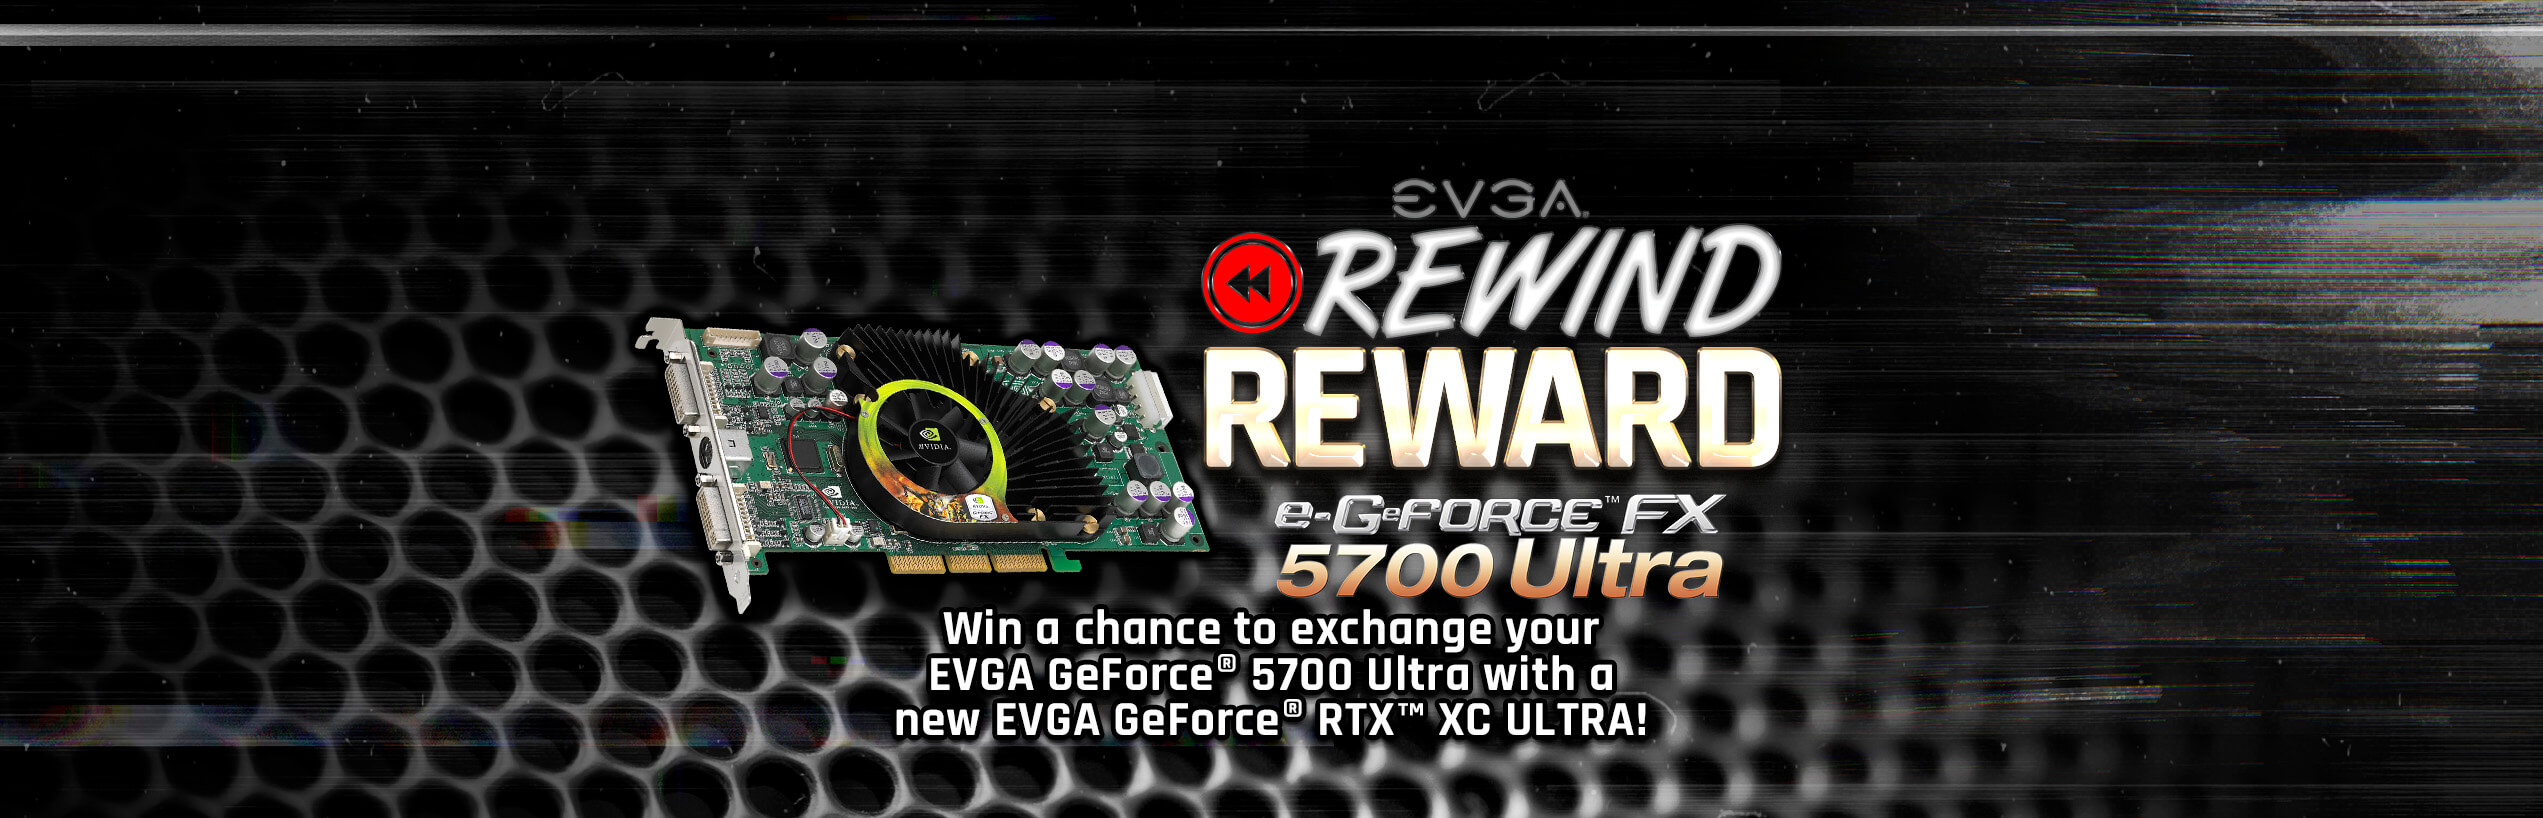 EVGA e-GeForce FX 5700 Ultra graphics card Rewind Reward Giveaway